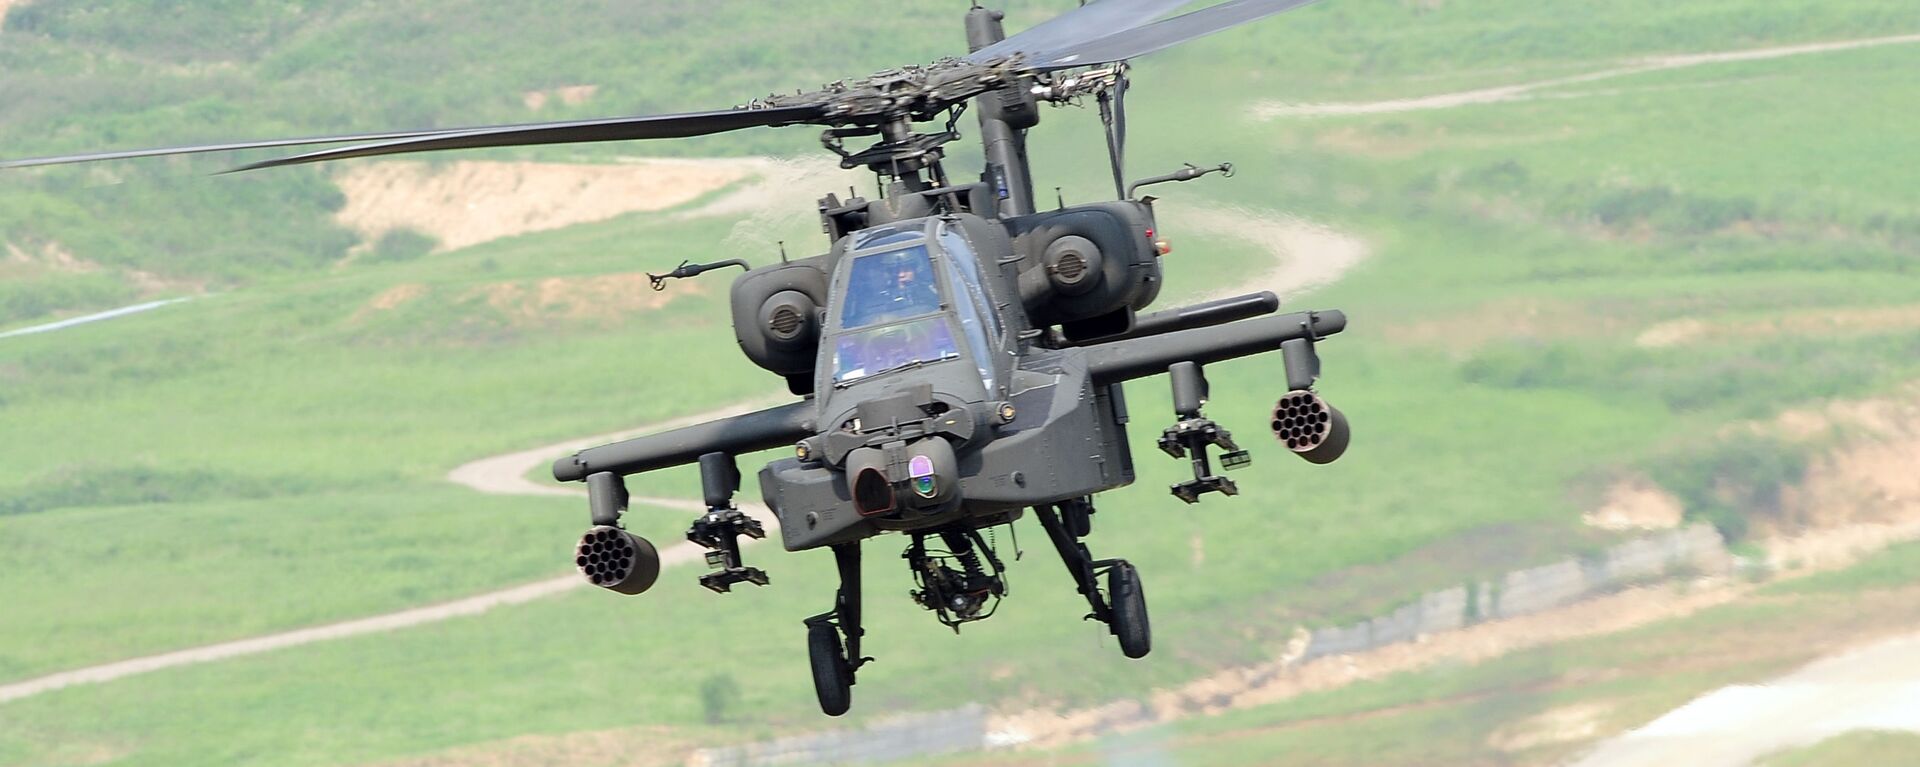 AH-64 Apache - Sputnik Việt Nam, 1920, 30.11.2019